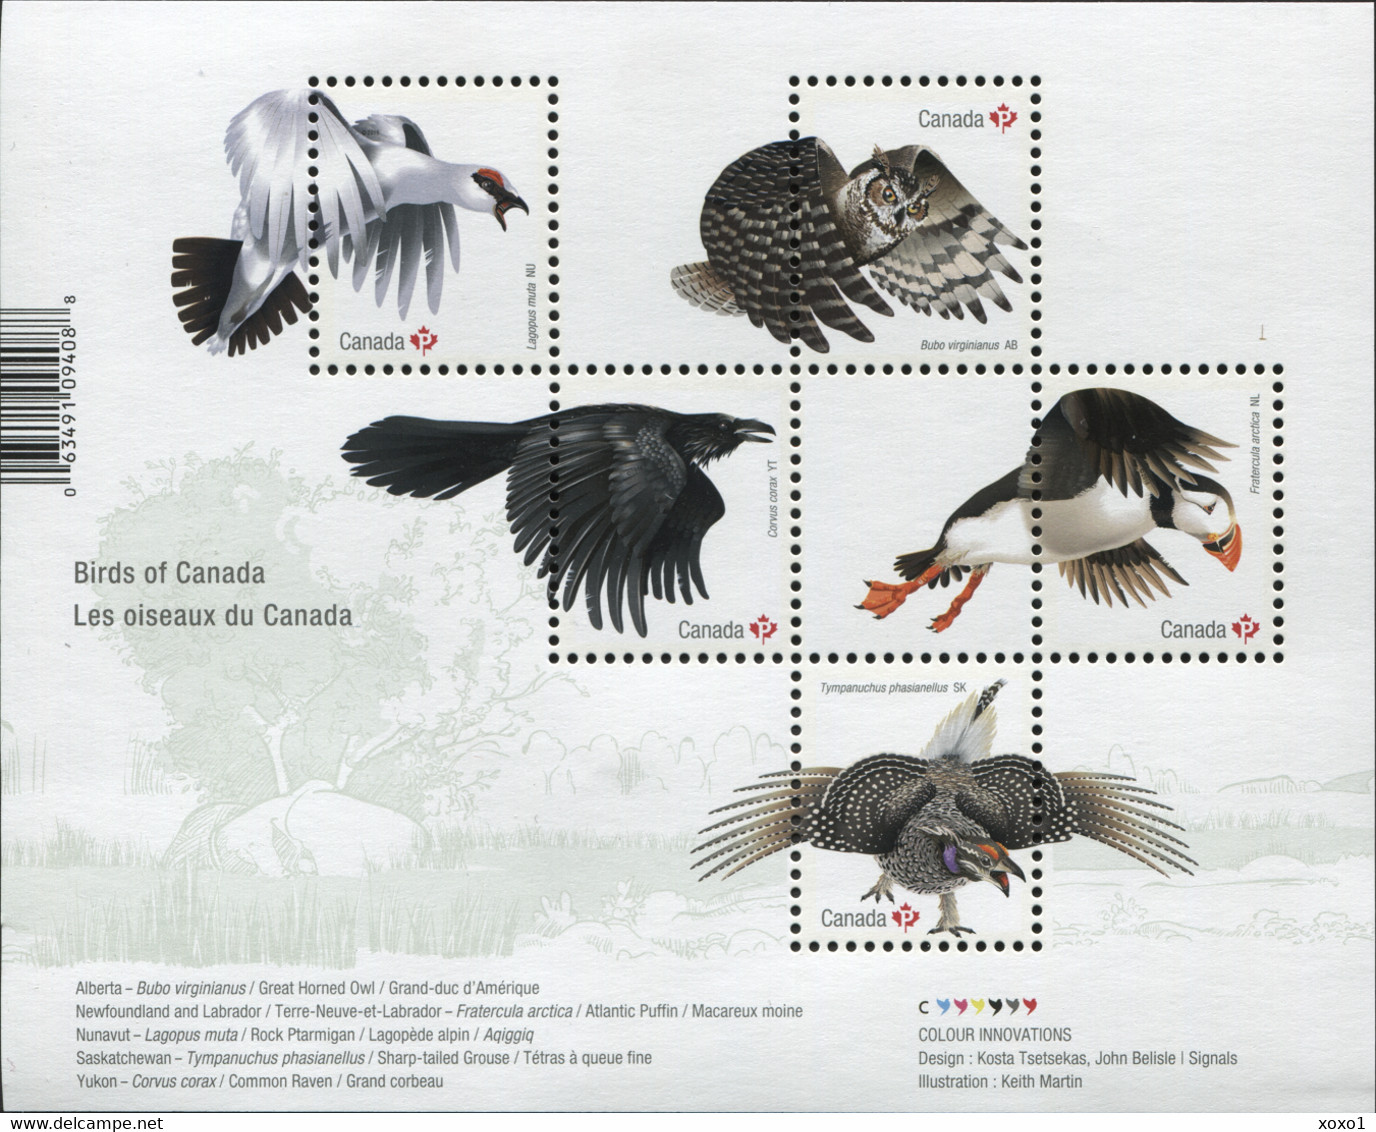 Canada 2016 MiNr. 3391 - 3395 (Block 238) Kanada Birds - I , Owls Puffins S\sh MNH ** 9,50 € - Owls